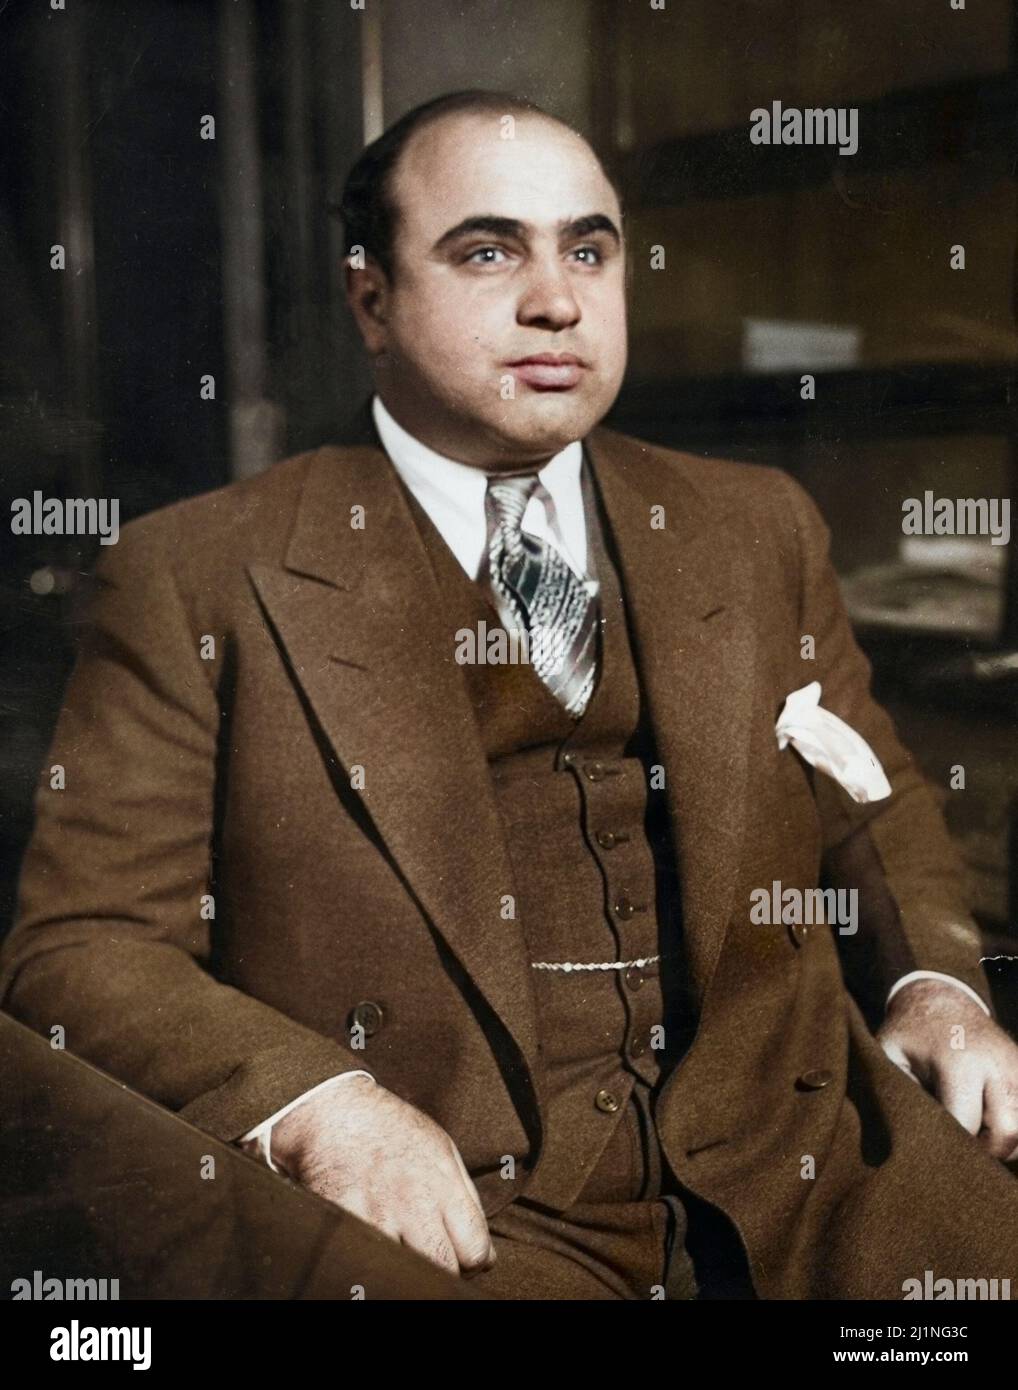 American criminal Al Capone (1899 - 1947). The Saint Valentine's Day massacre cemented his control over the Chicago underworld. 1930. Colorized. Stock Photo